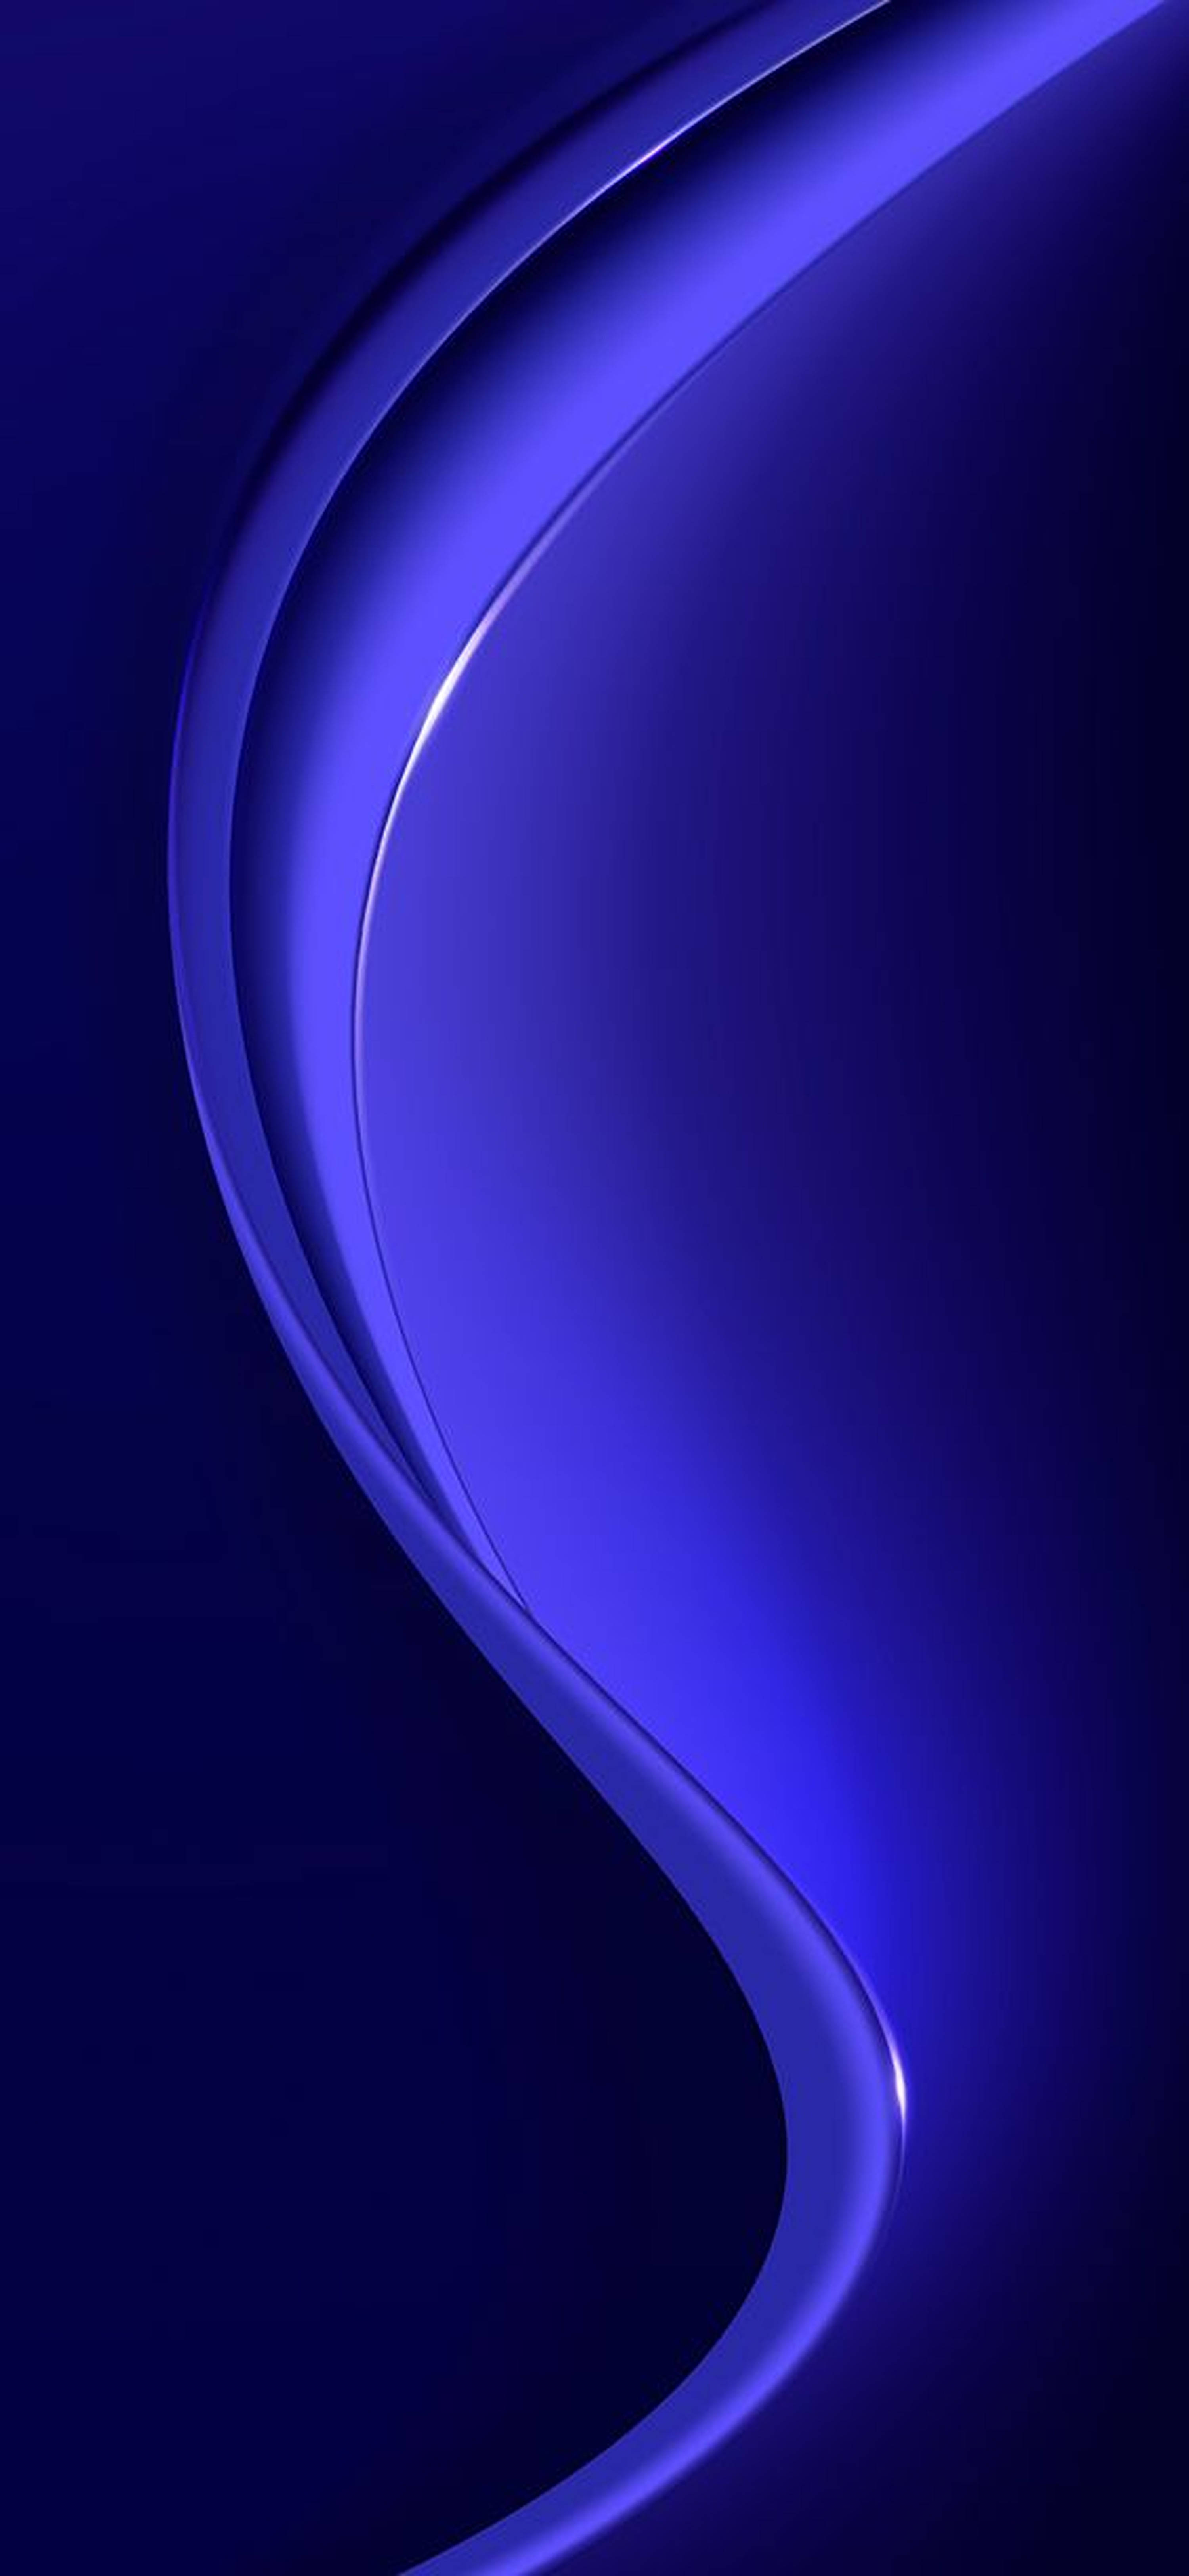 Vibrant Blue Light Wave On Redmi Note 9 Pro Background